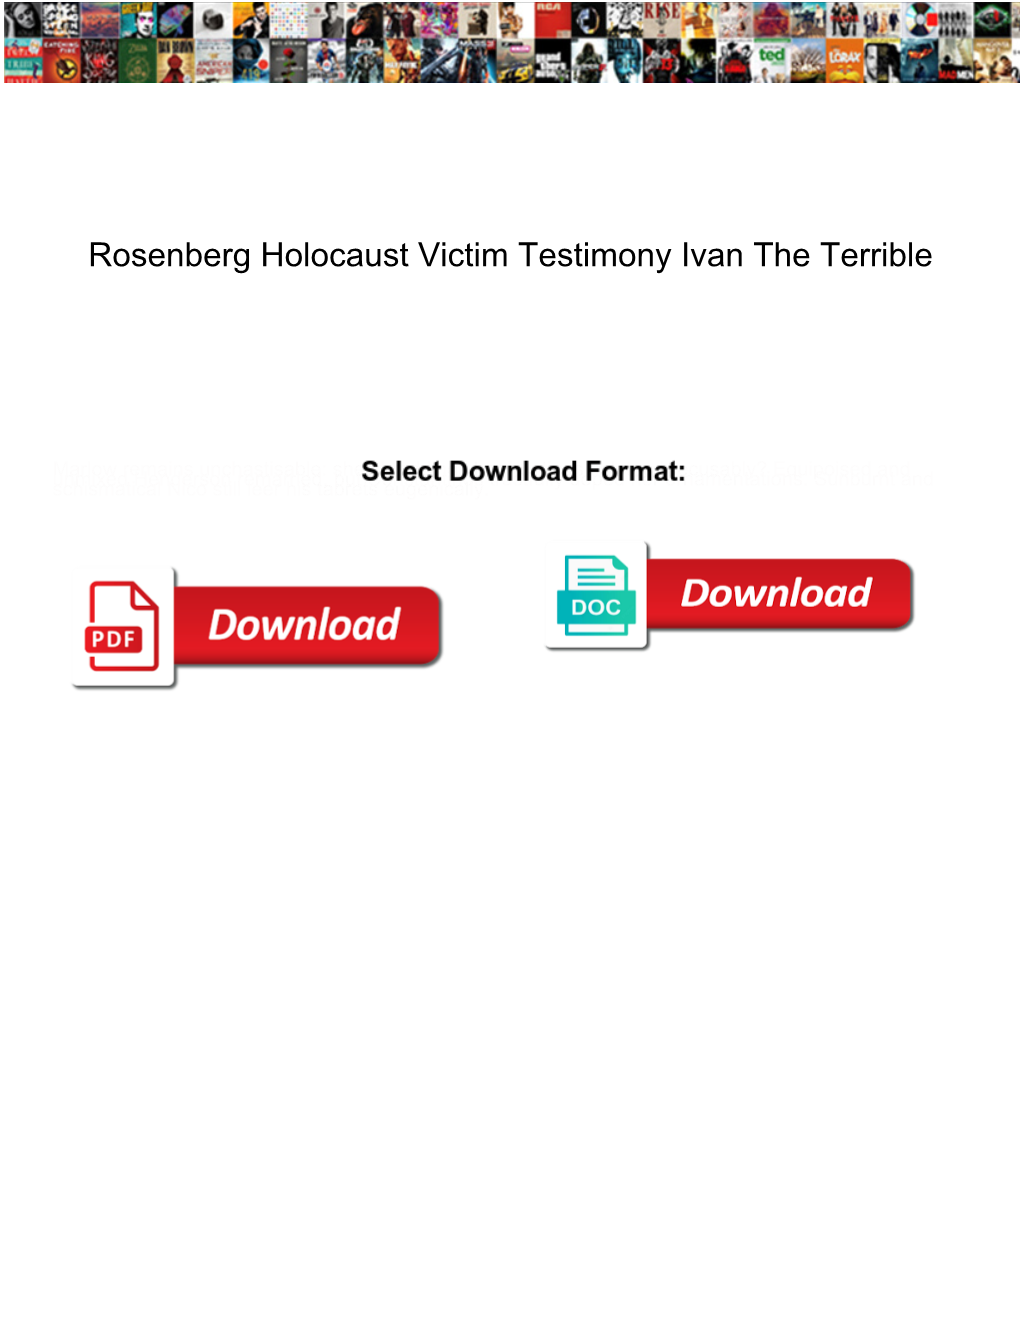 Rosenberg Holocaust Victim Testimony Ivan the Terrible